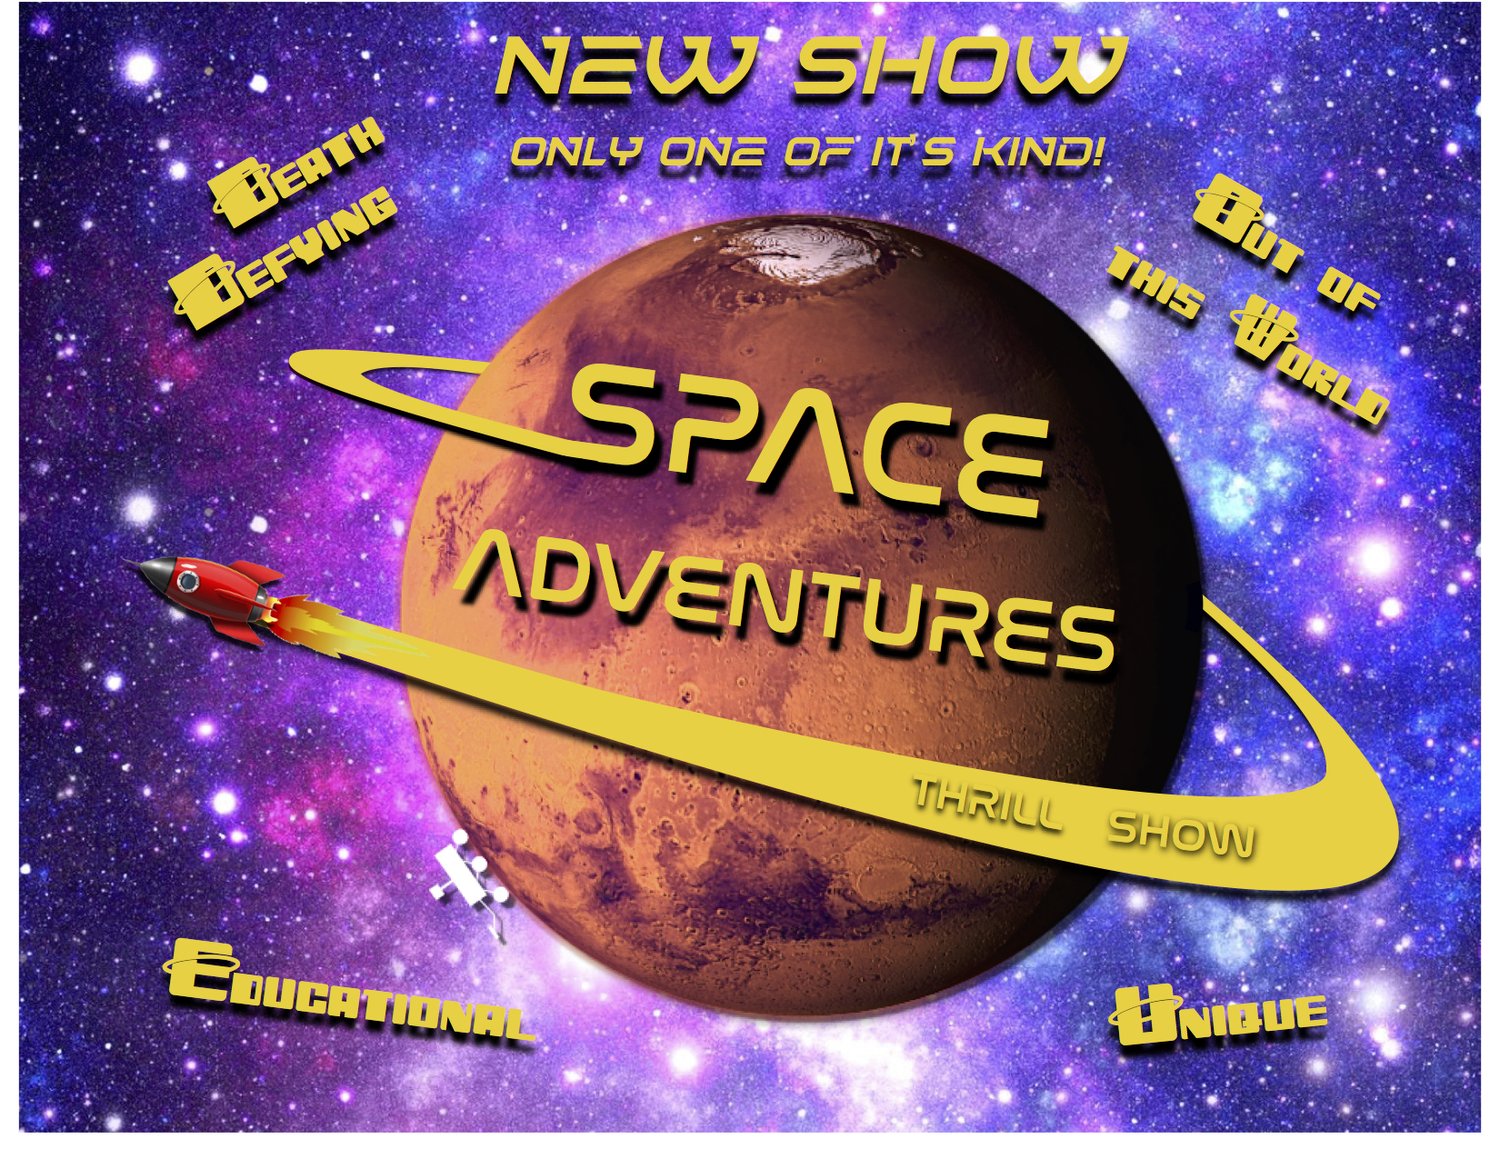 Space Adventures Logo